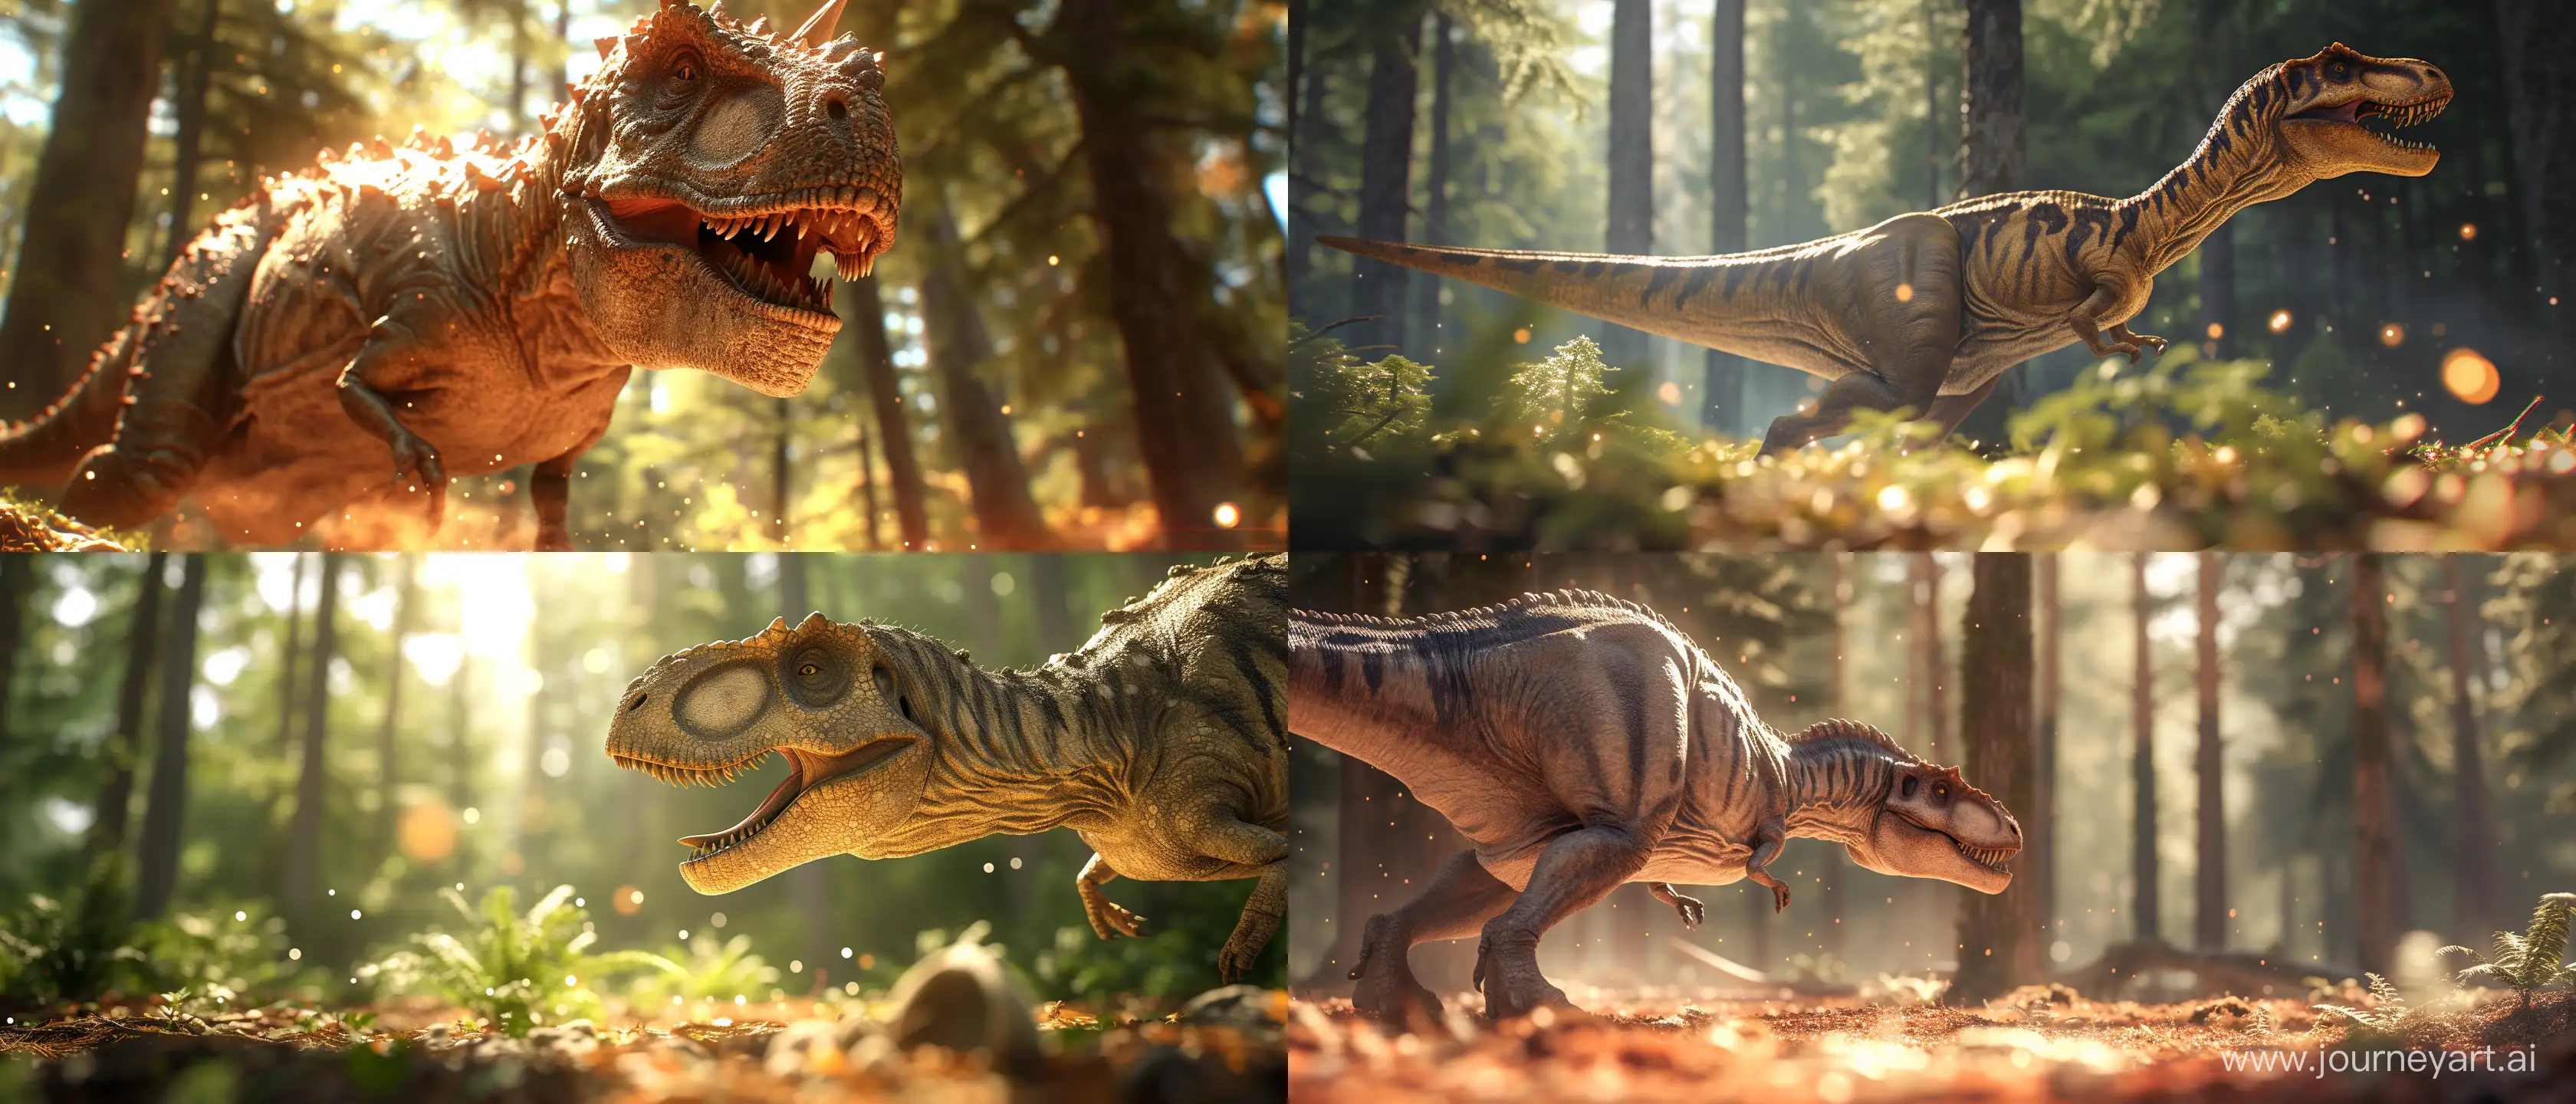 HyperRealistic-Dinosaur-Encounter-in-a-Sunlit-Forest